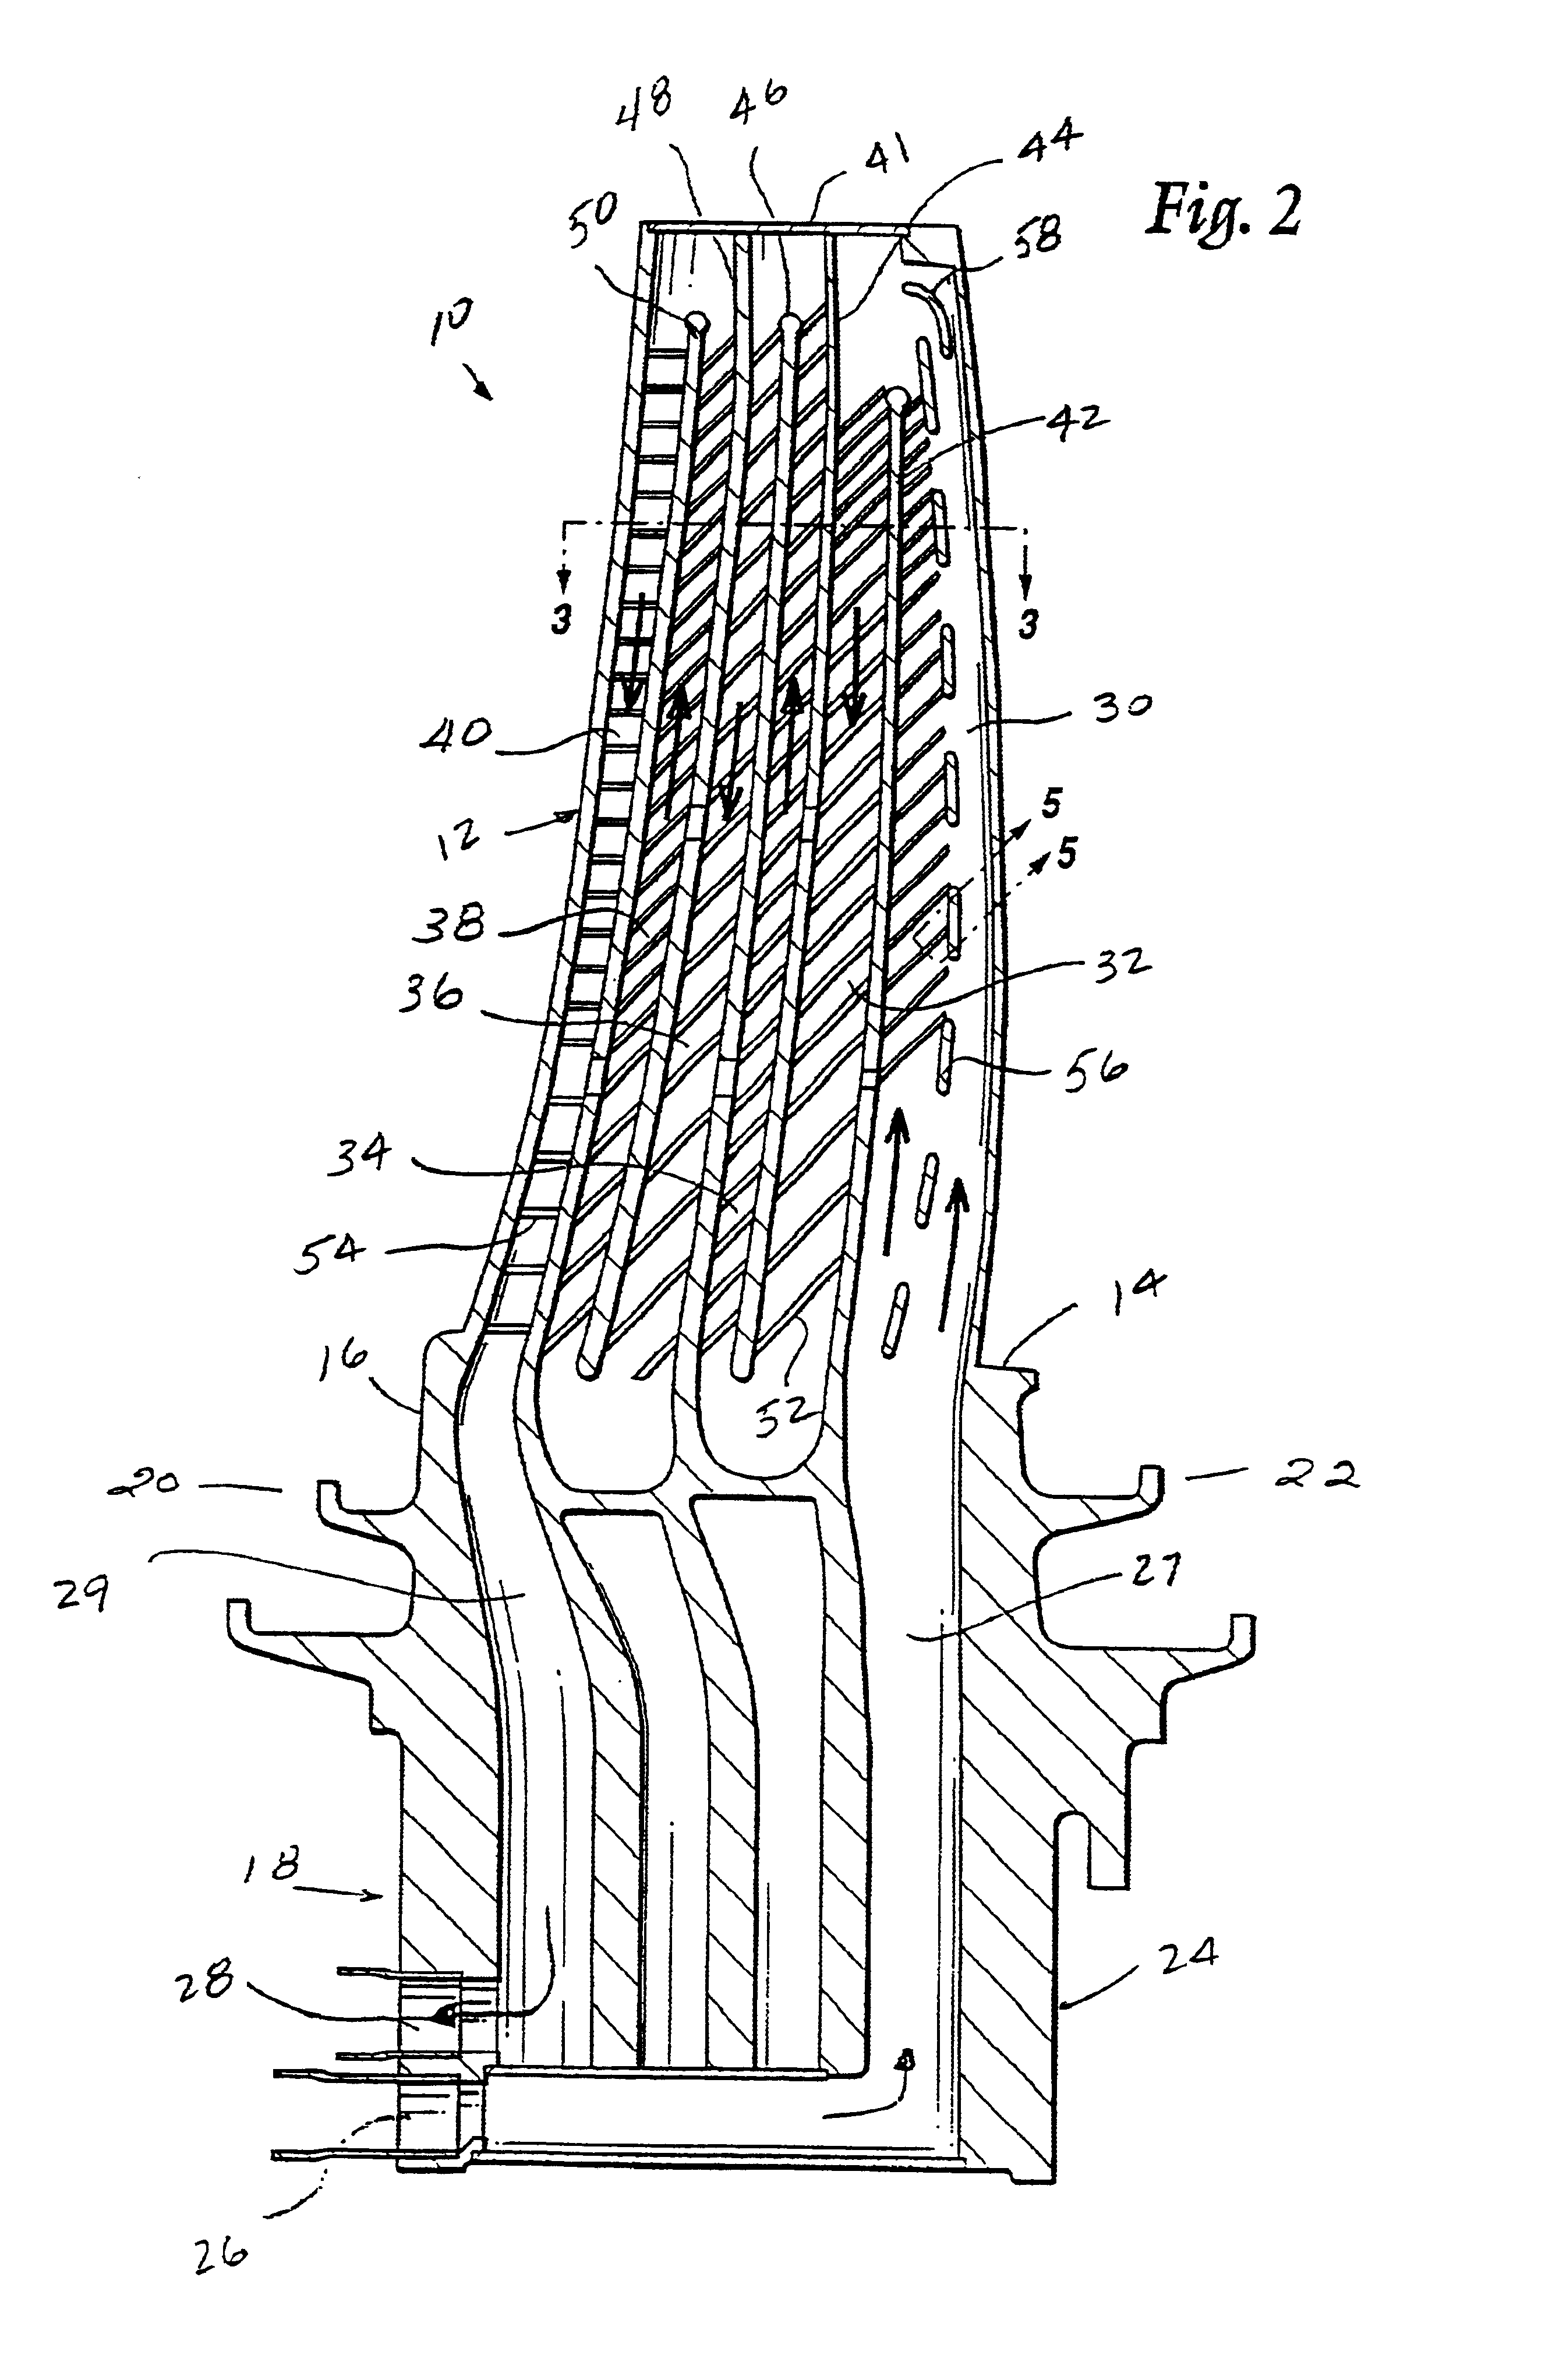 Internal cooling circuit for gas turbine bucket